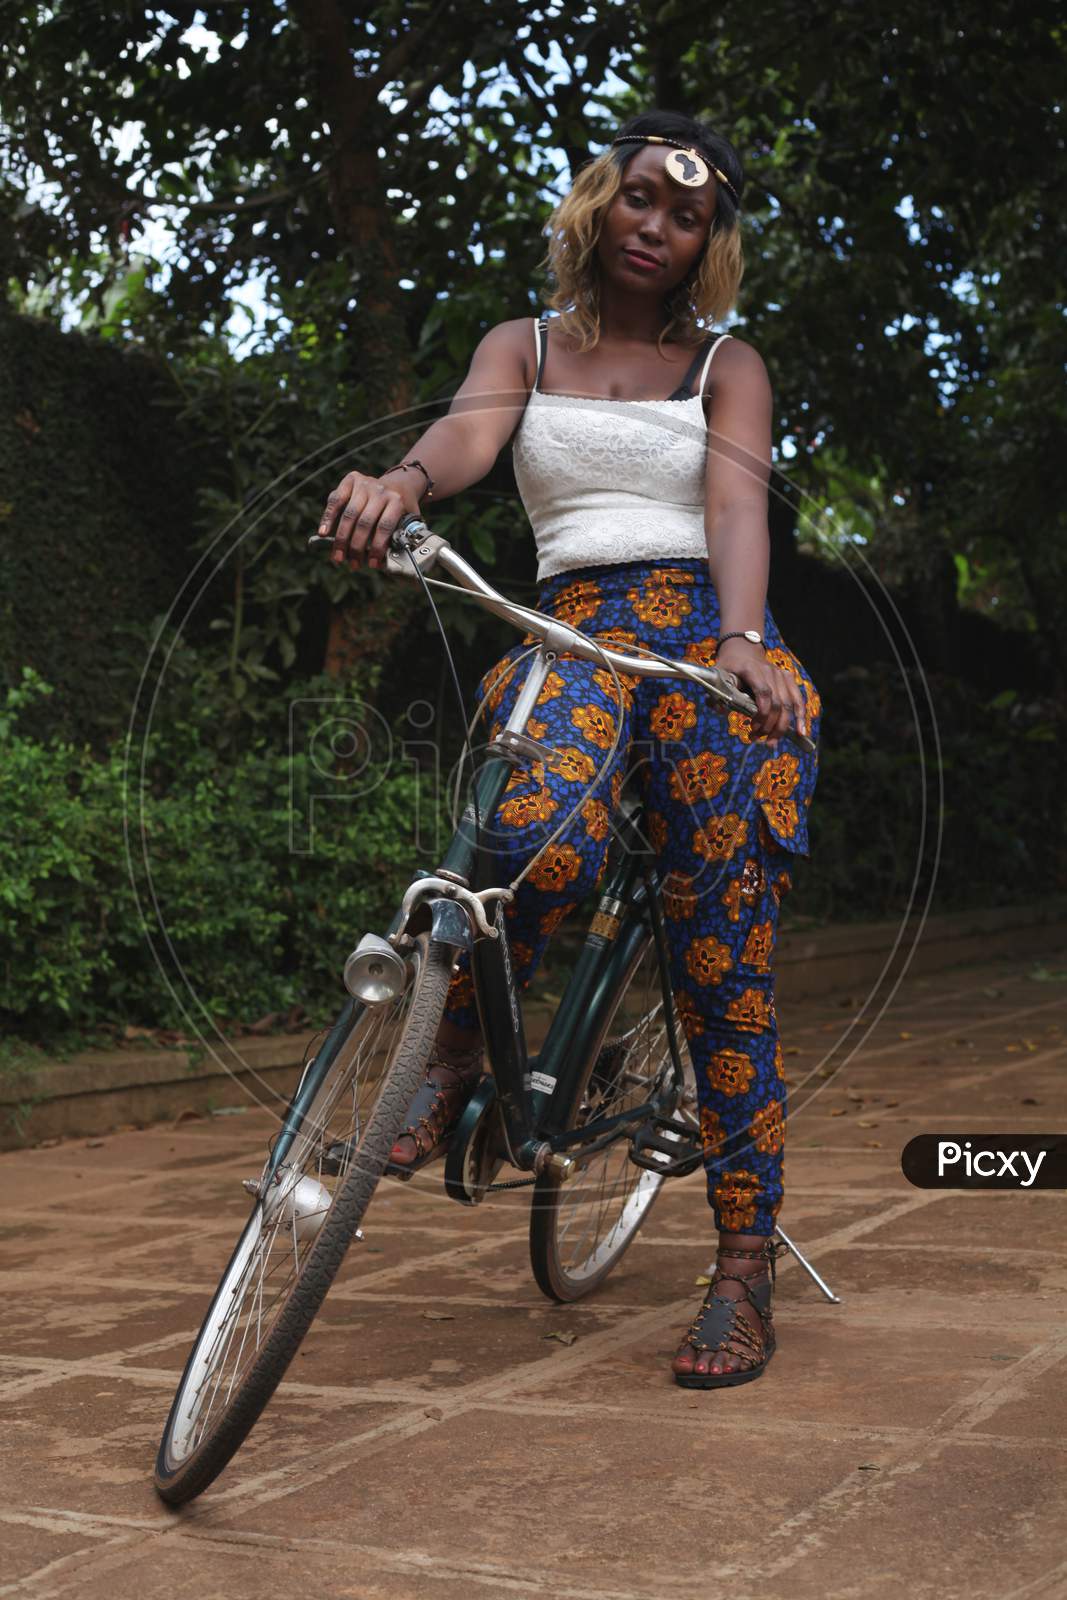 70+ Free Bicycle Portraits & Bicycle Images - Pixabay